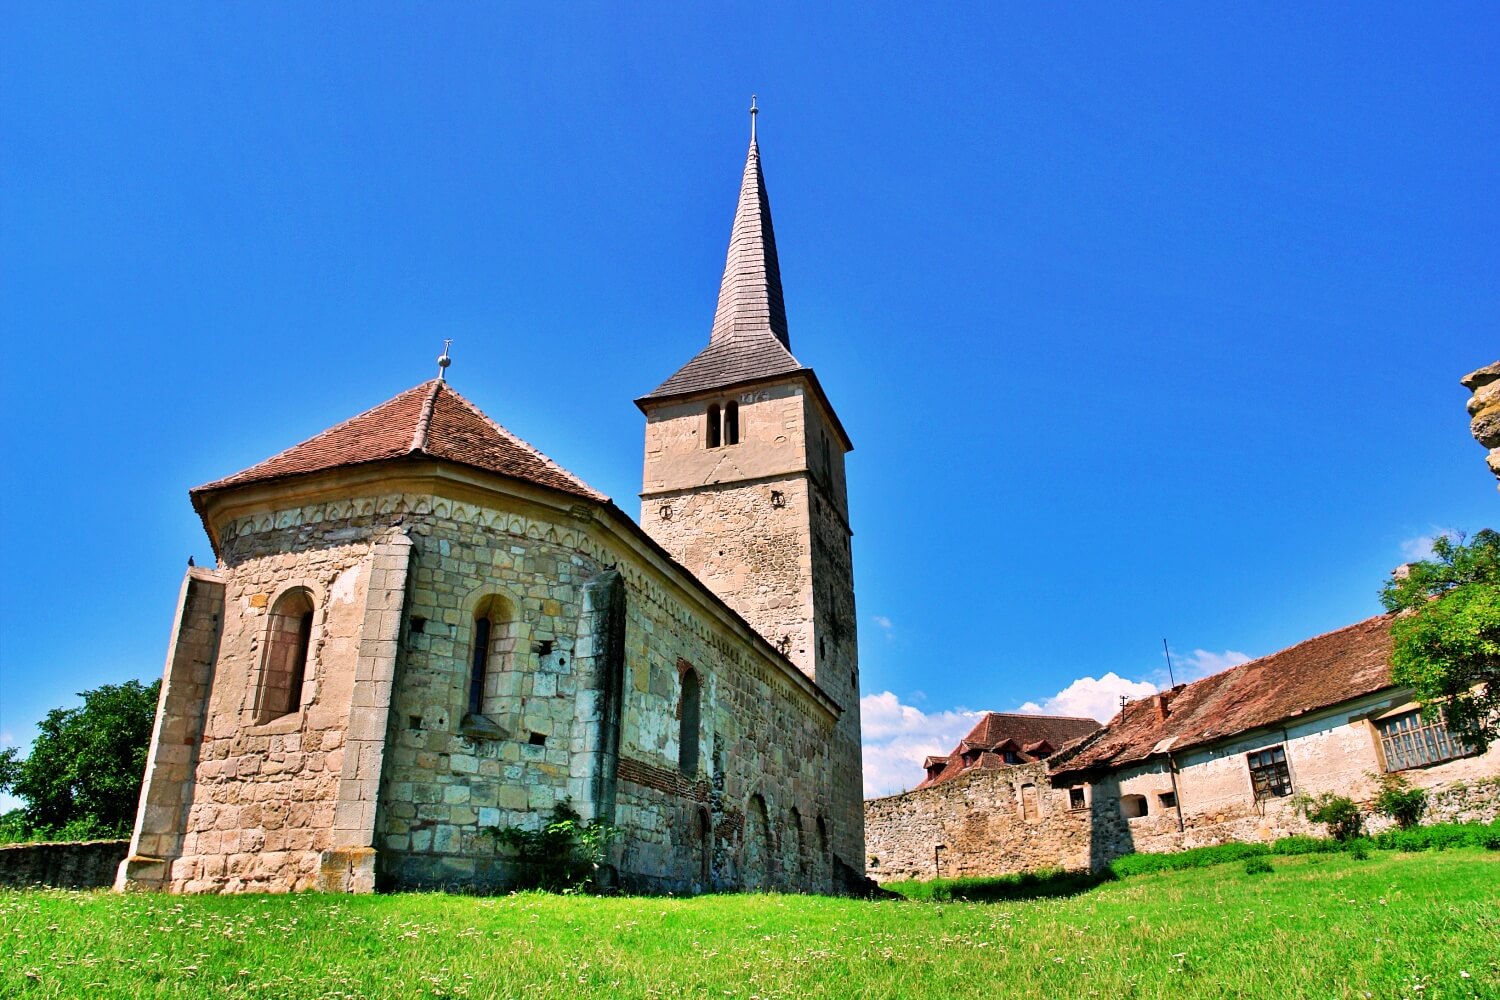 Cricău Fortified Church